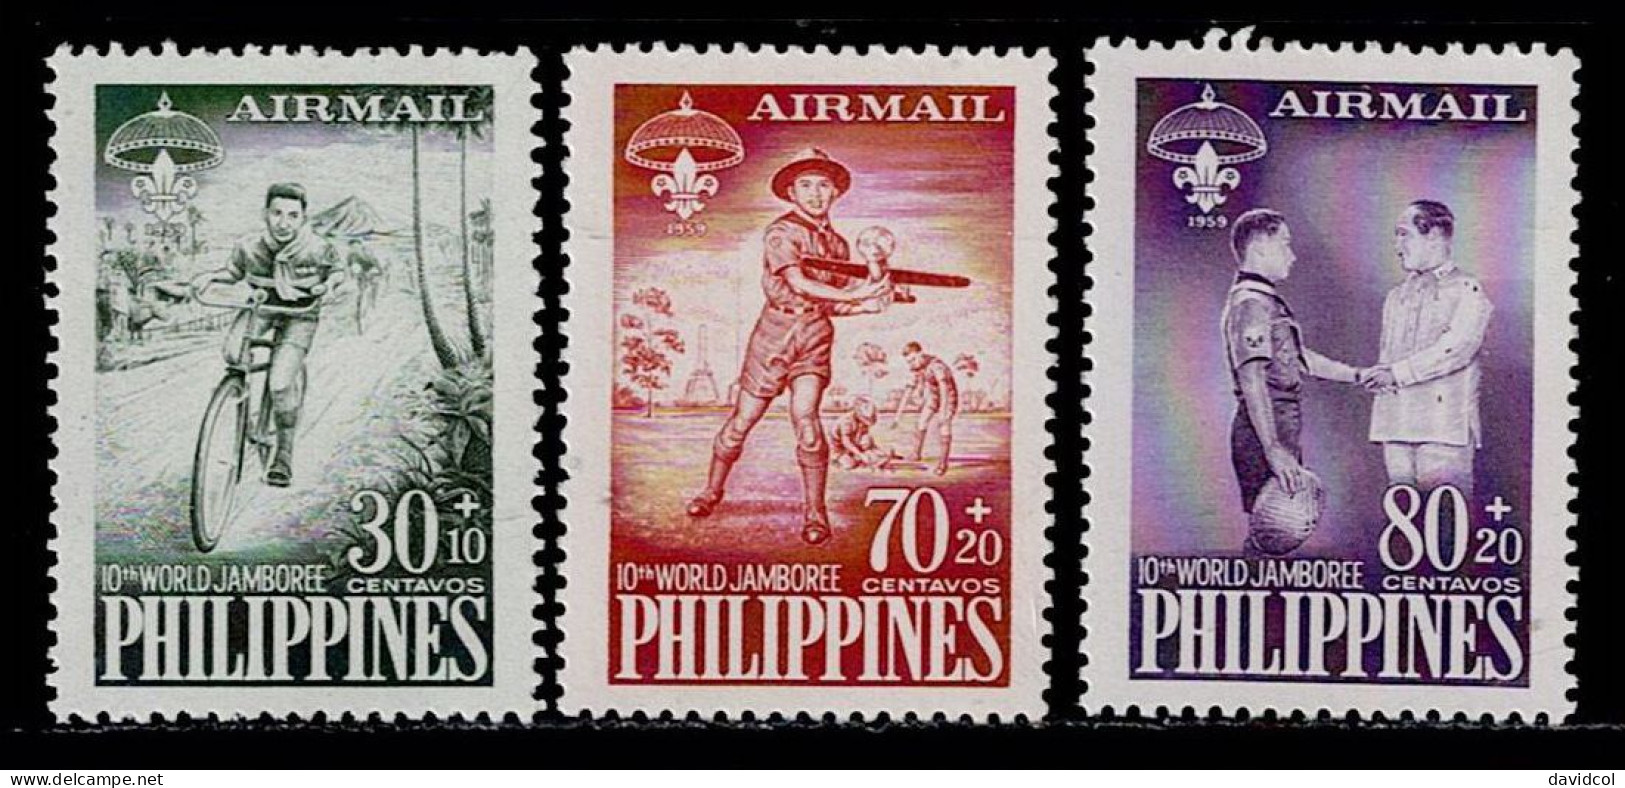 FIL-11- PHILIPPINES - 1959 - MNH -SCOUTS- 10TH WORLD JAMBOREE -AIR - Philippinen